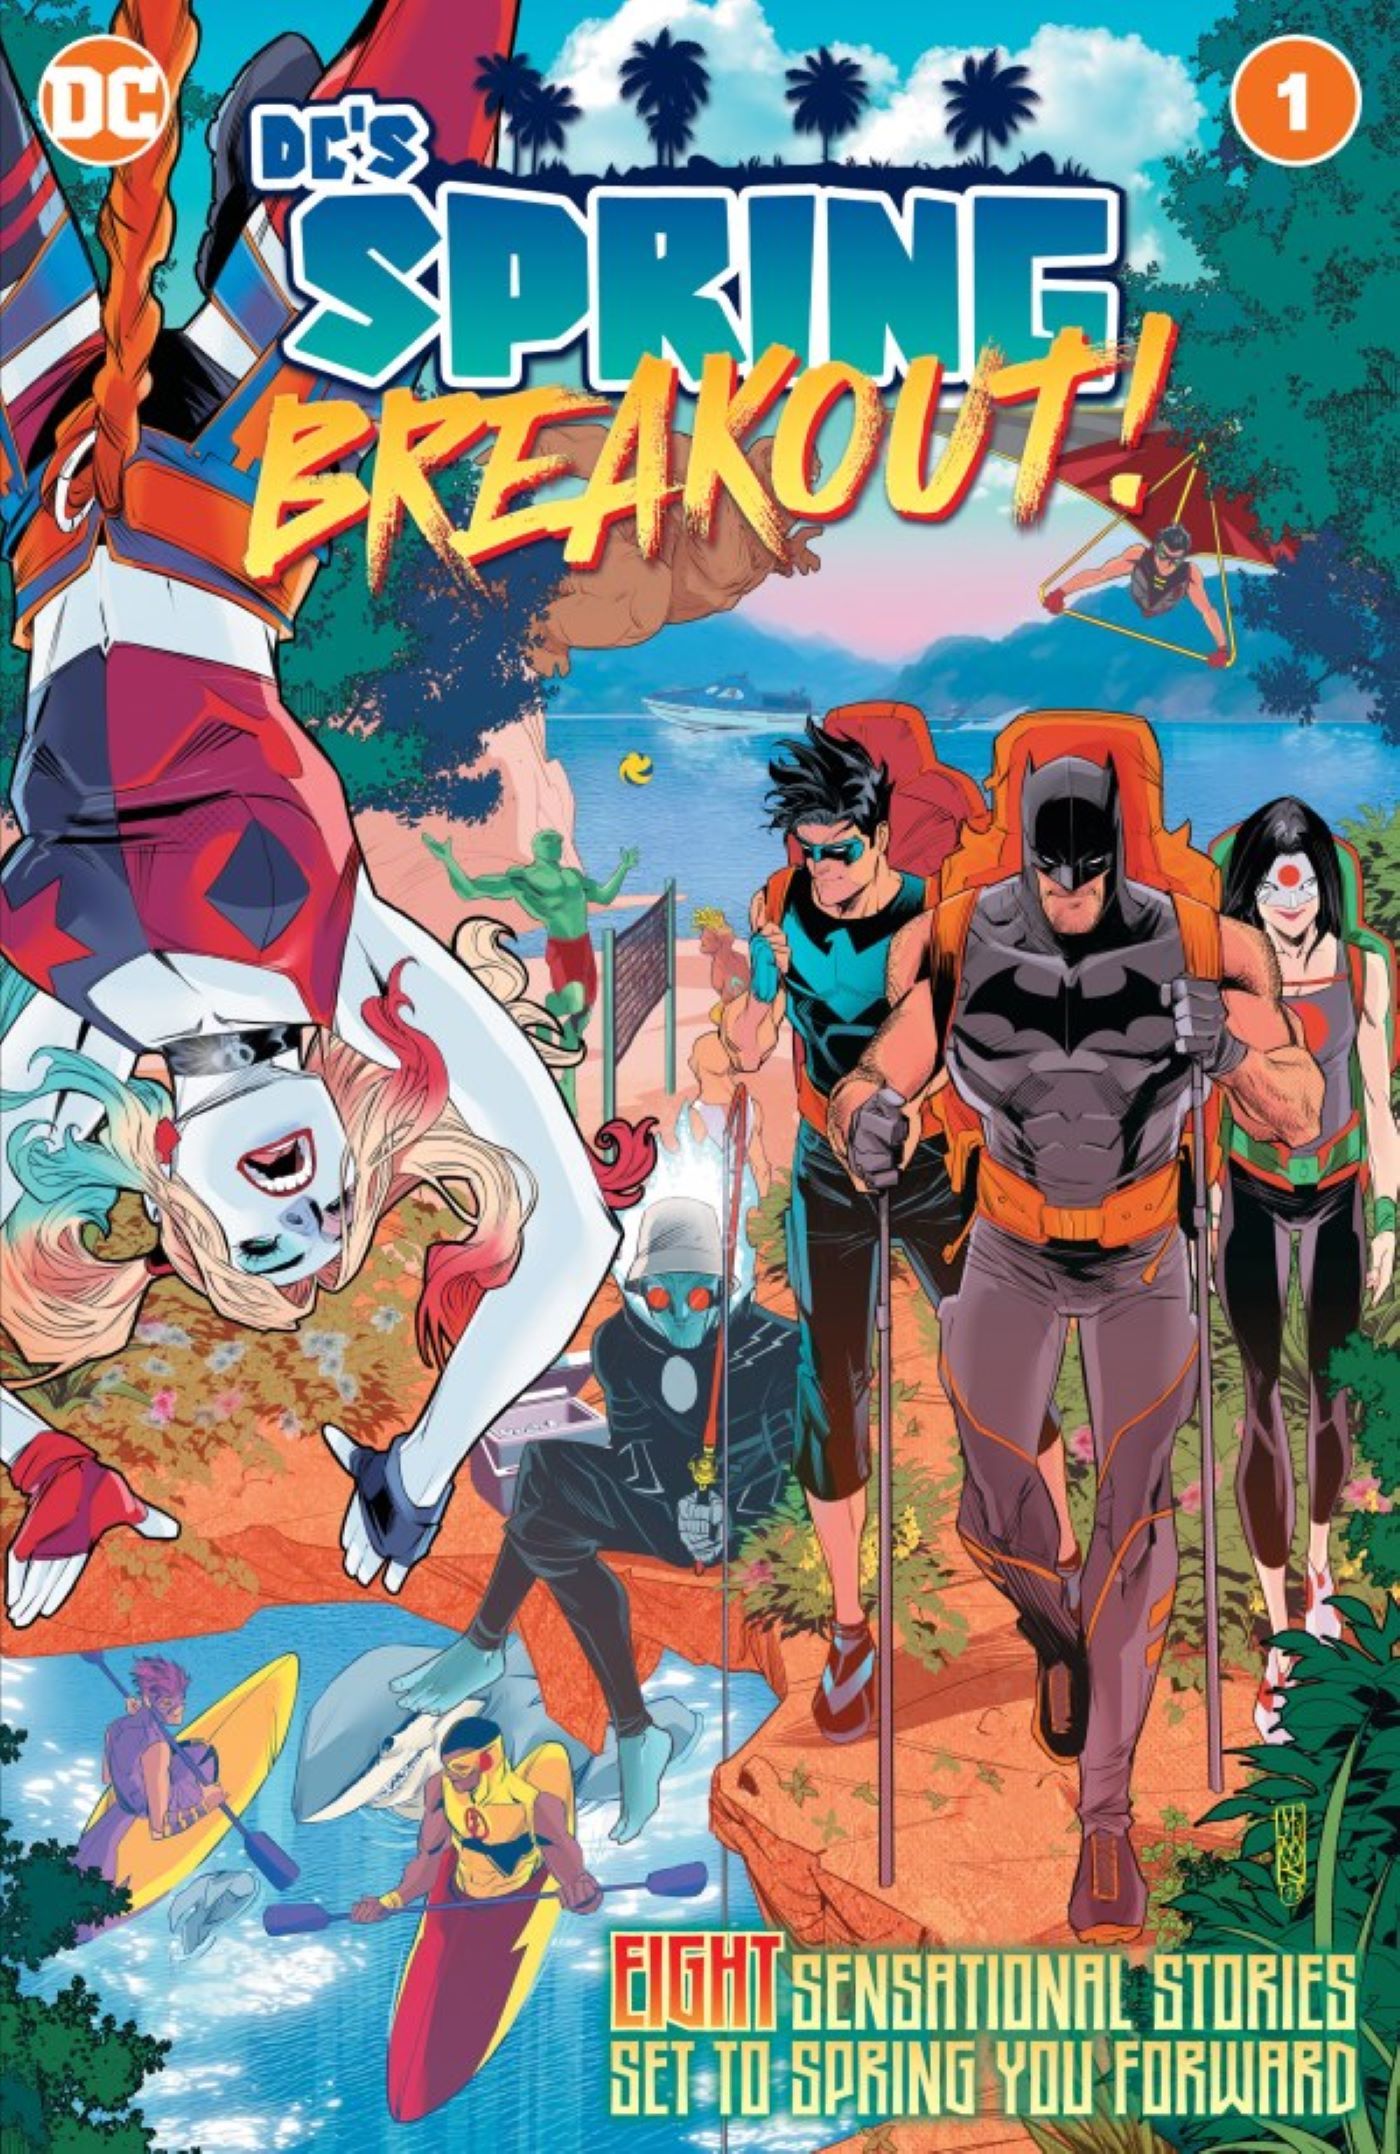 DC's Spring Breakout 1 Main Cover featuring Batman Katana Nightwing Harley Quinn Freeze